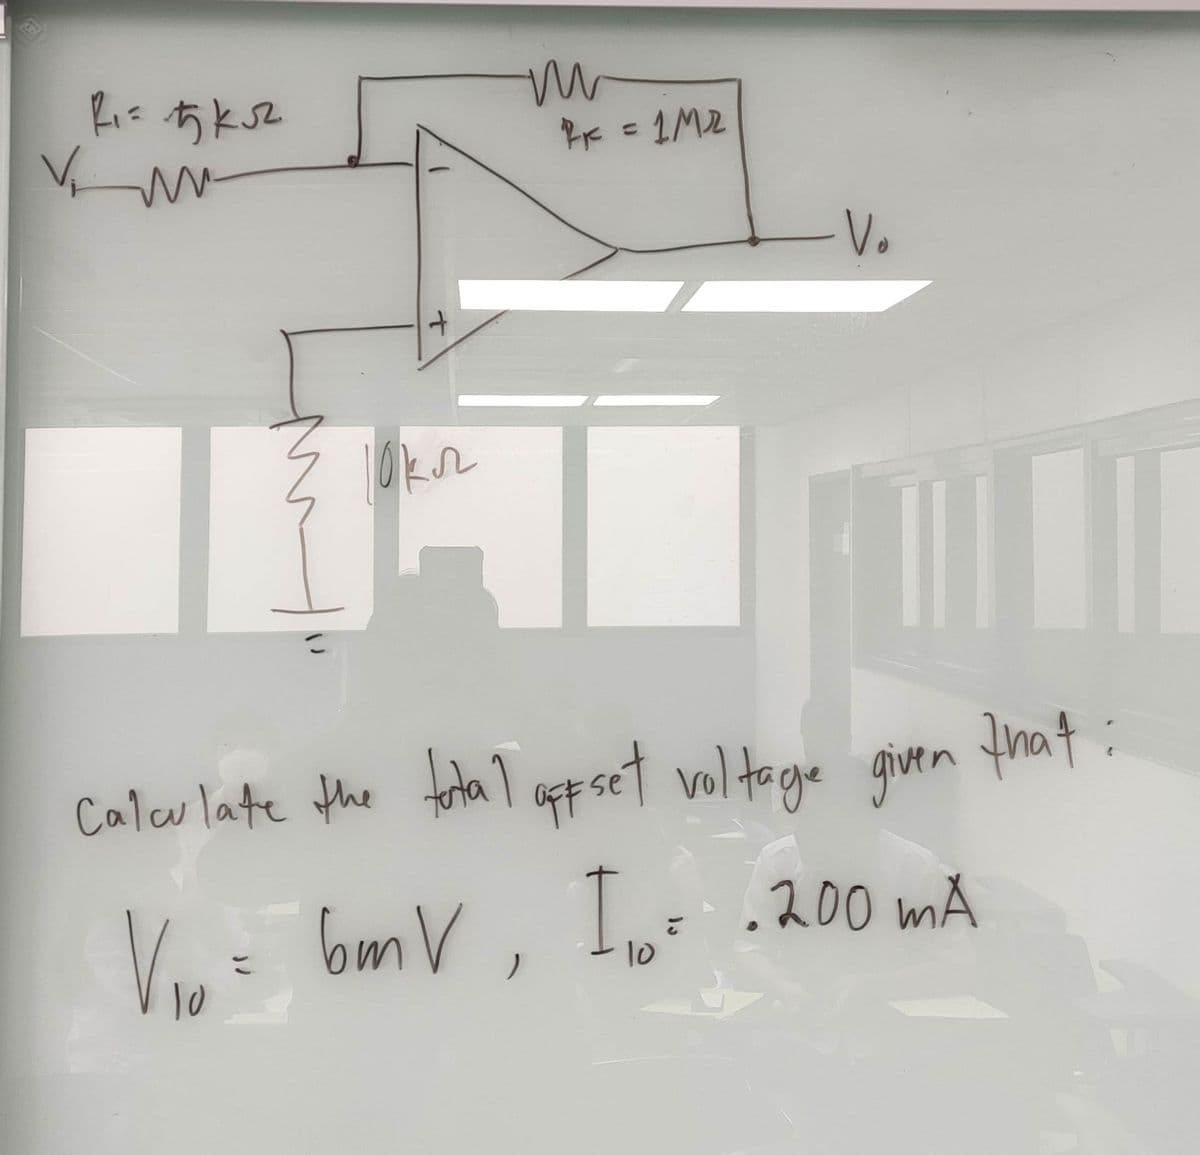 R₁= √5) K²
V₂
ww
1
loker
m
R₁ = 1/₂
Vo
10
that:
Calculate the total offset voltage given
V₁₂ = 6mV, I₁0 = 200 mA
bm
10
10